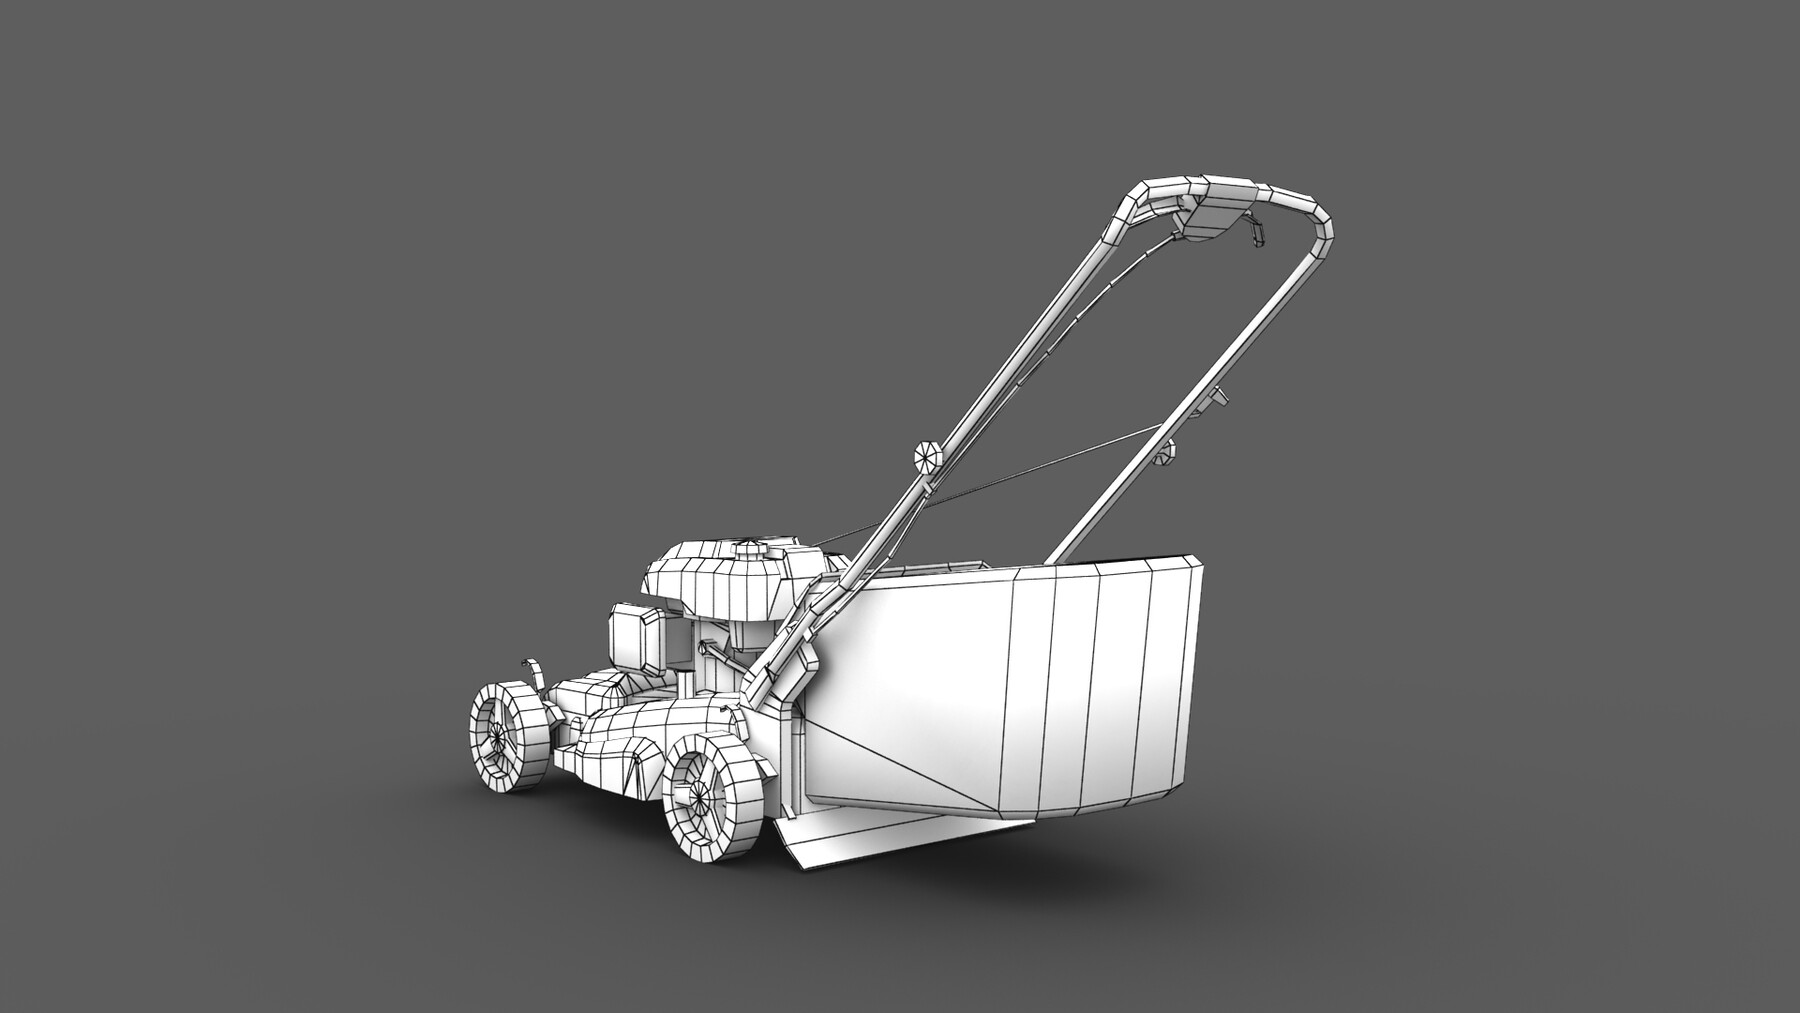 3D model Push Reel Lawn Mower VR / AR / low-poly